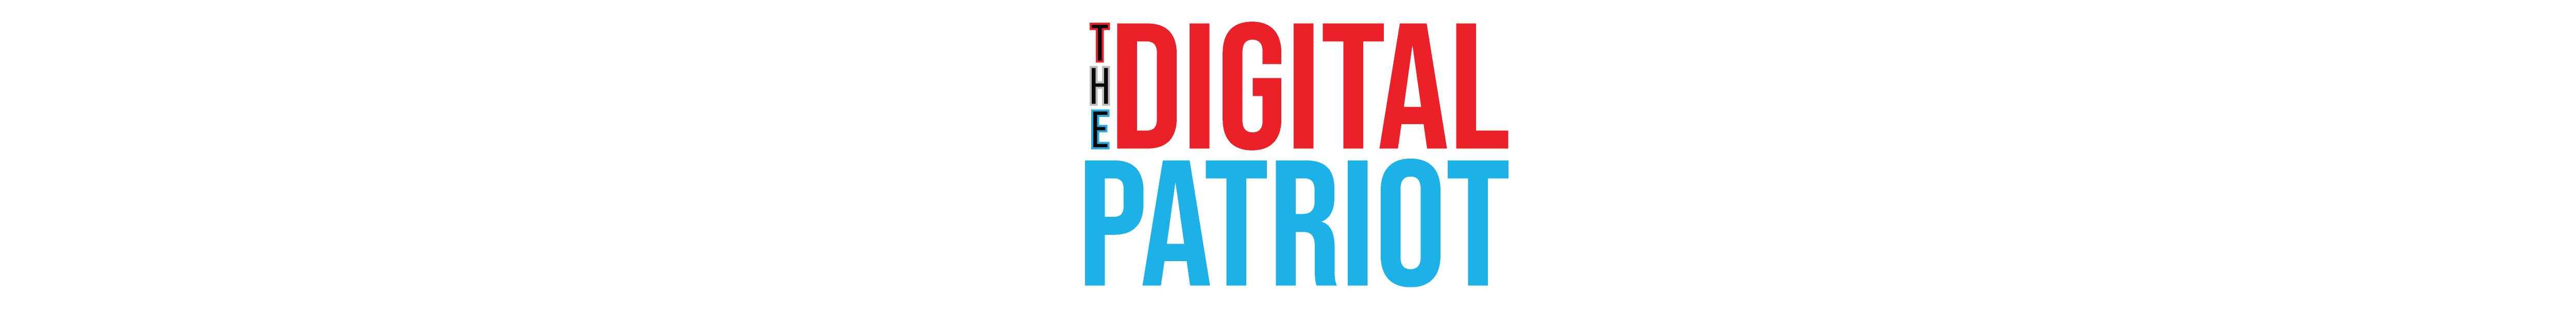 The Digital Patriot